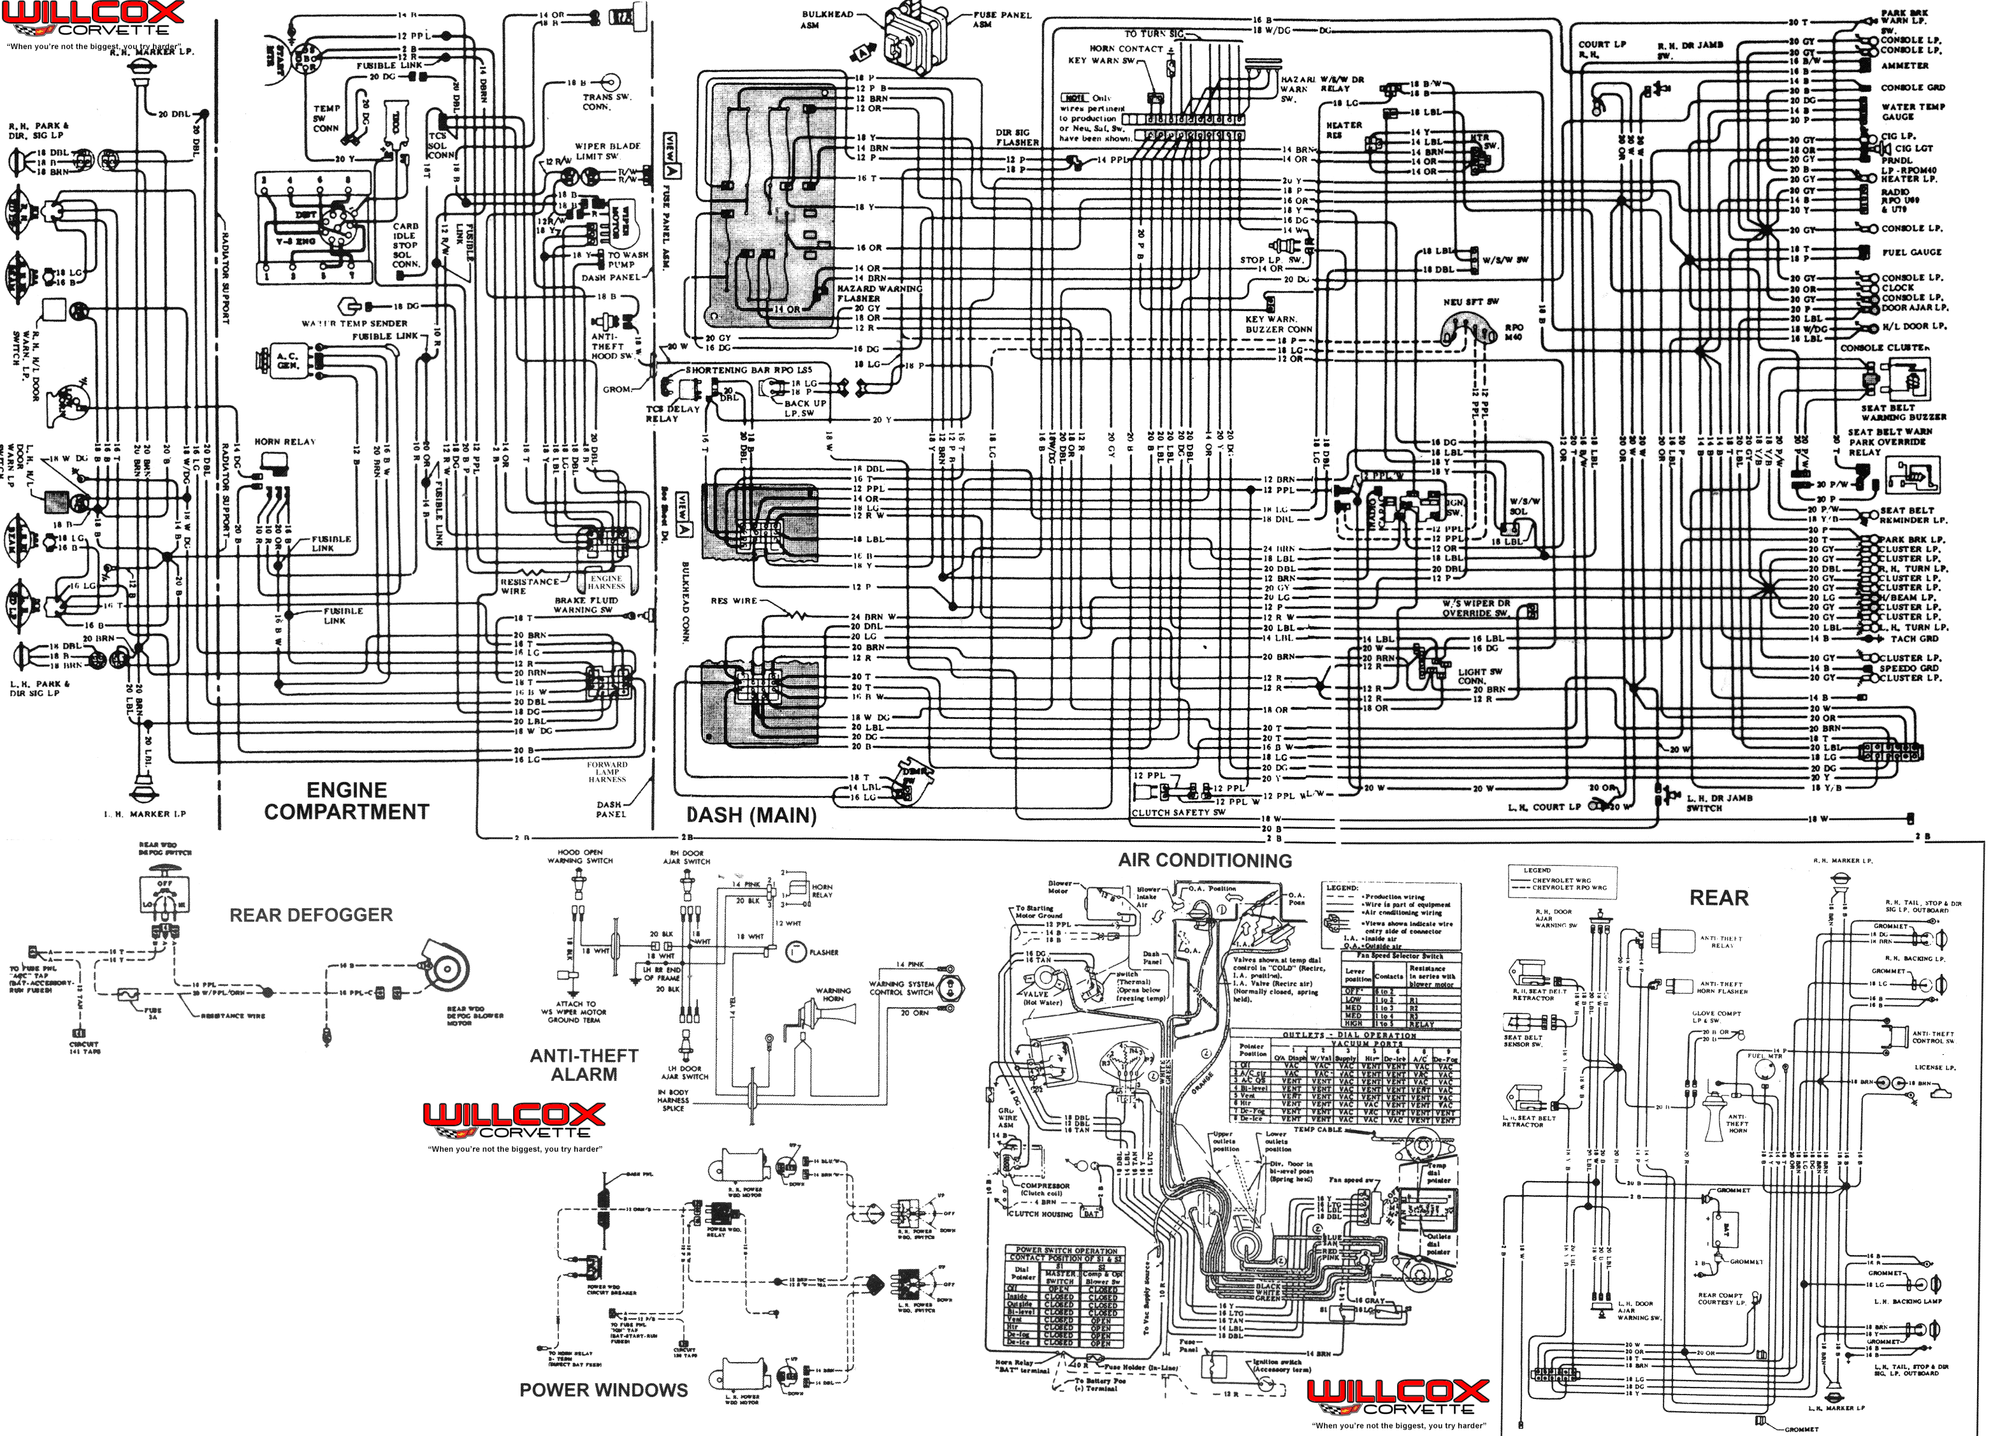 Help...1972 wiring diagram wanted? - CorvetteForum - Chevrolet Corvette